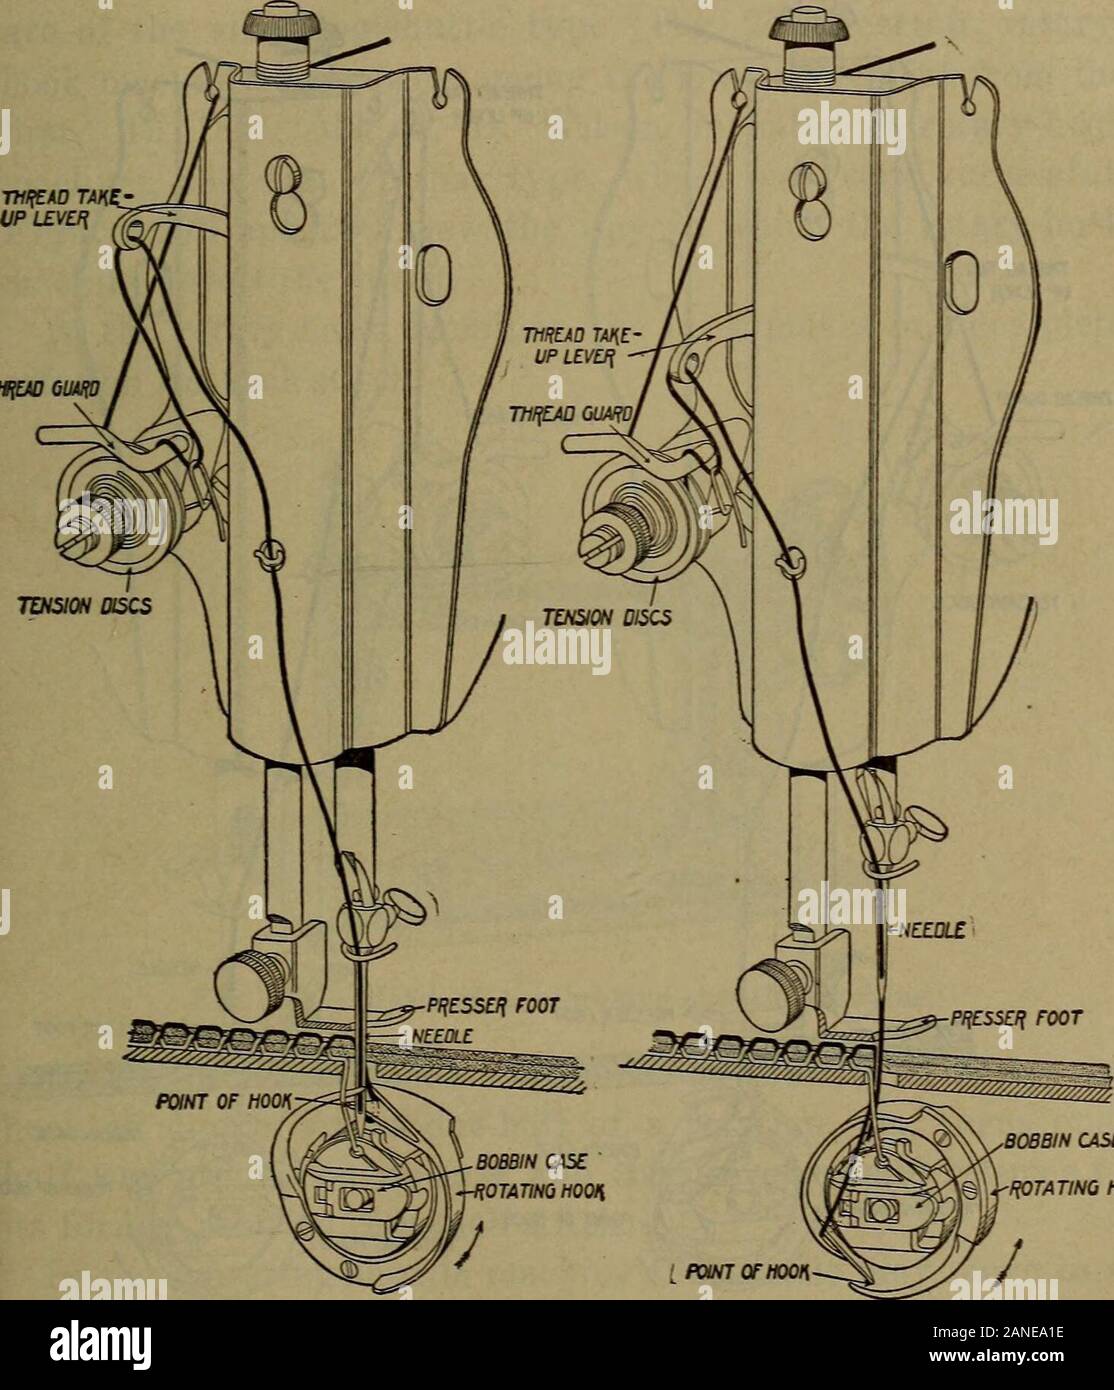 sewing machine bobbin threading diagrams